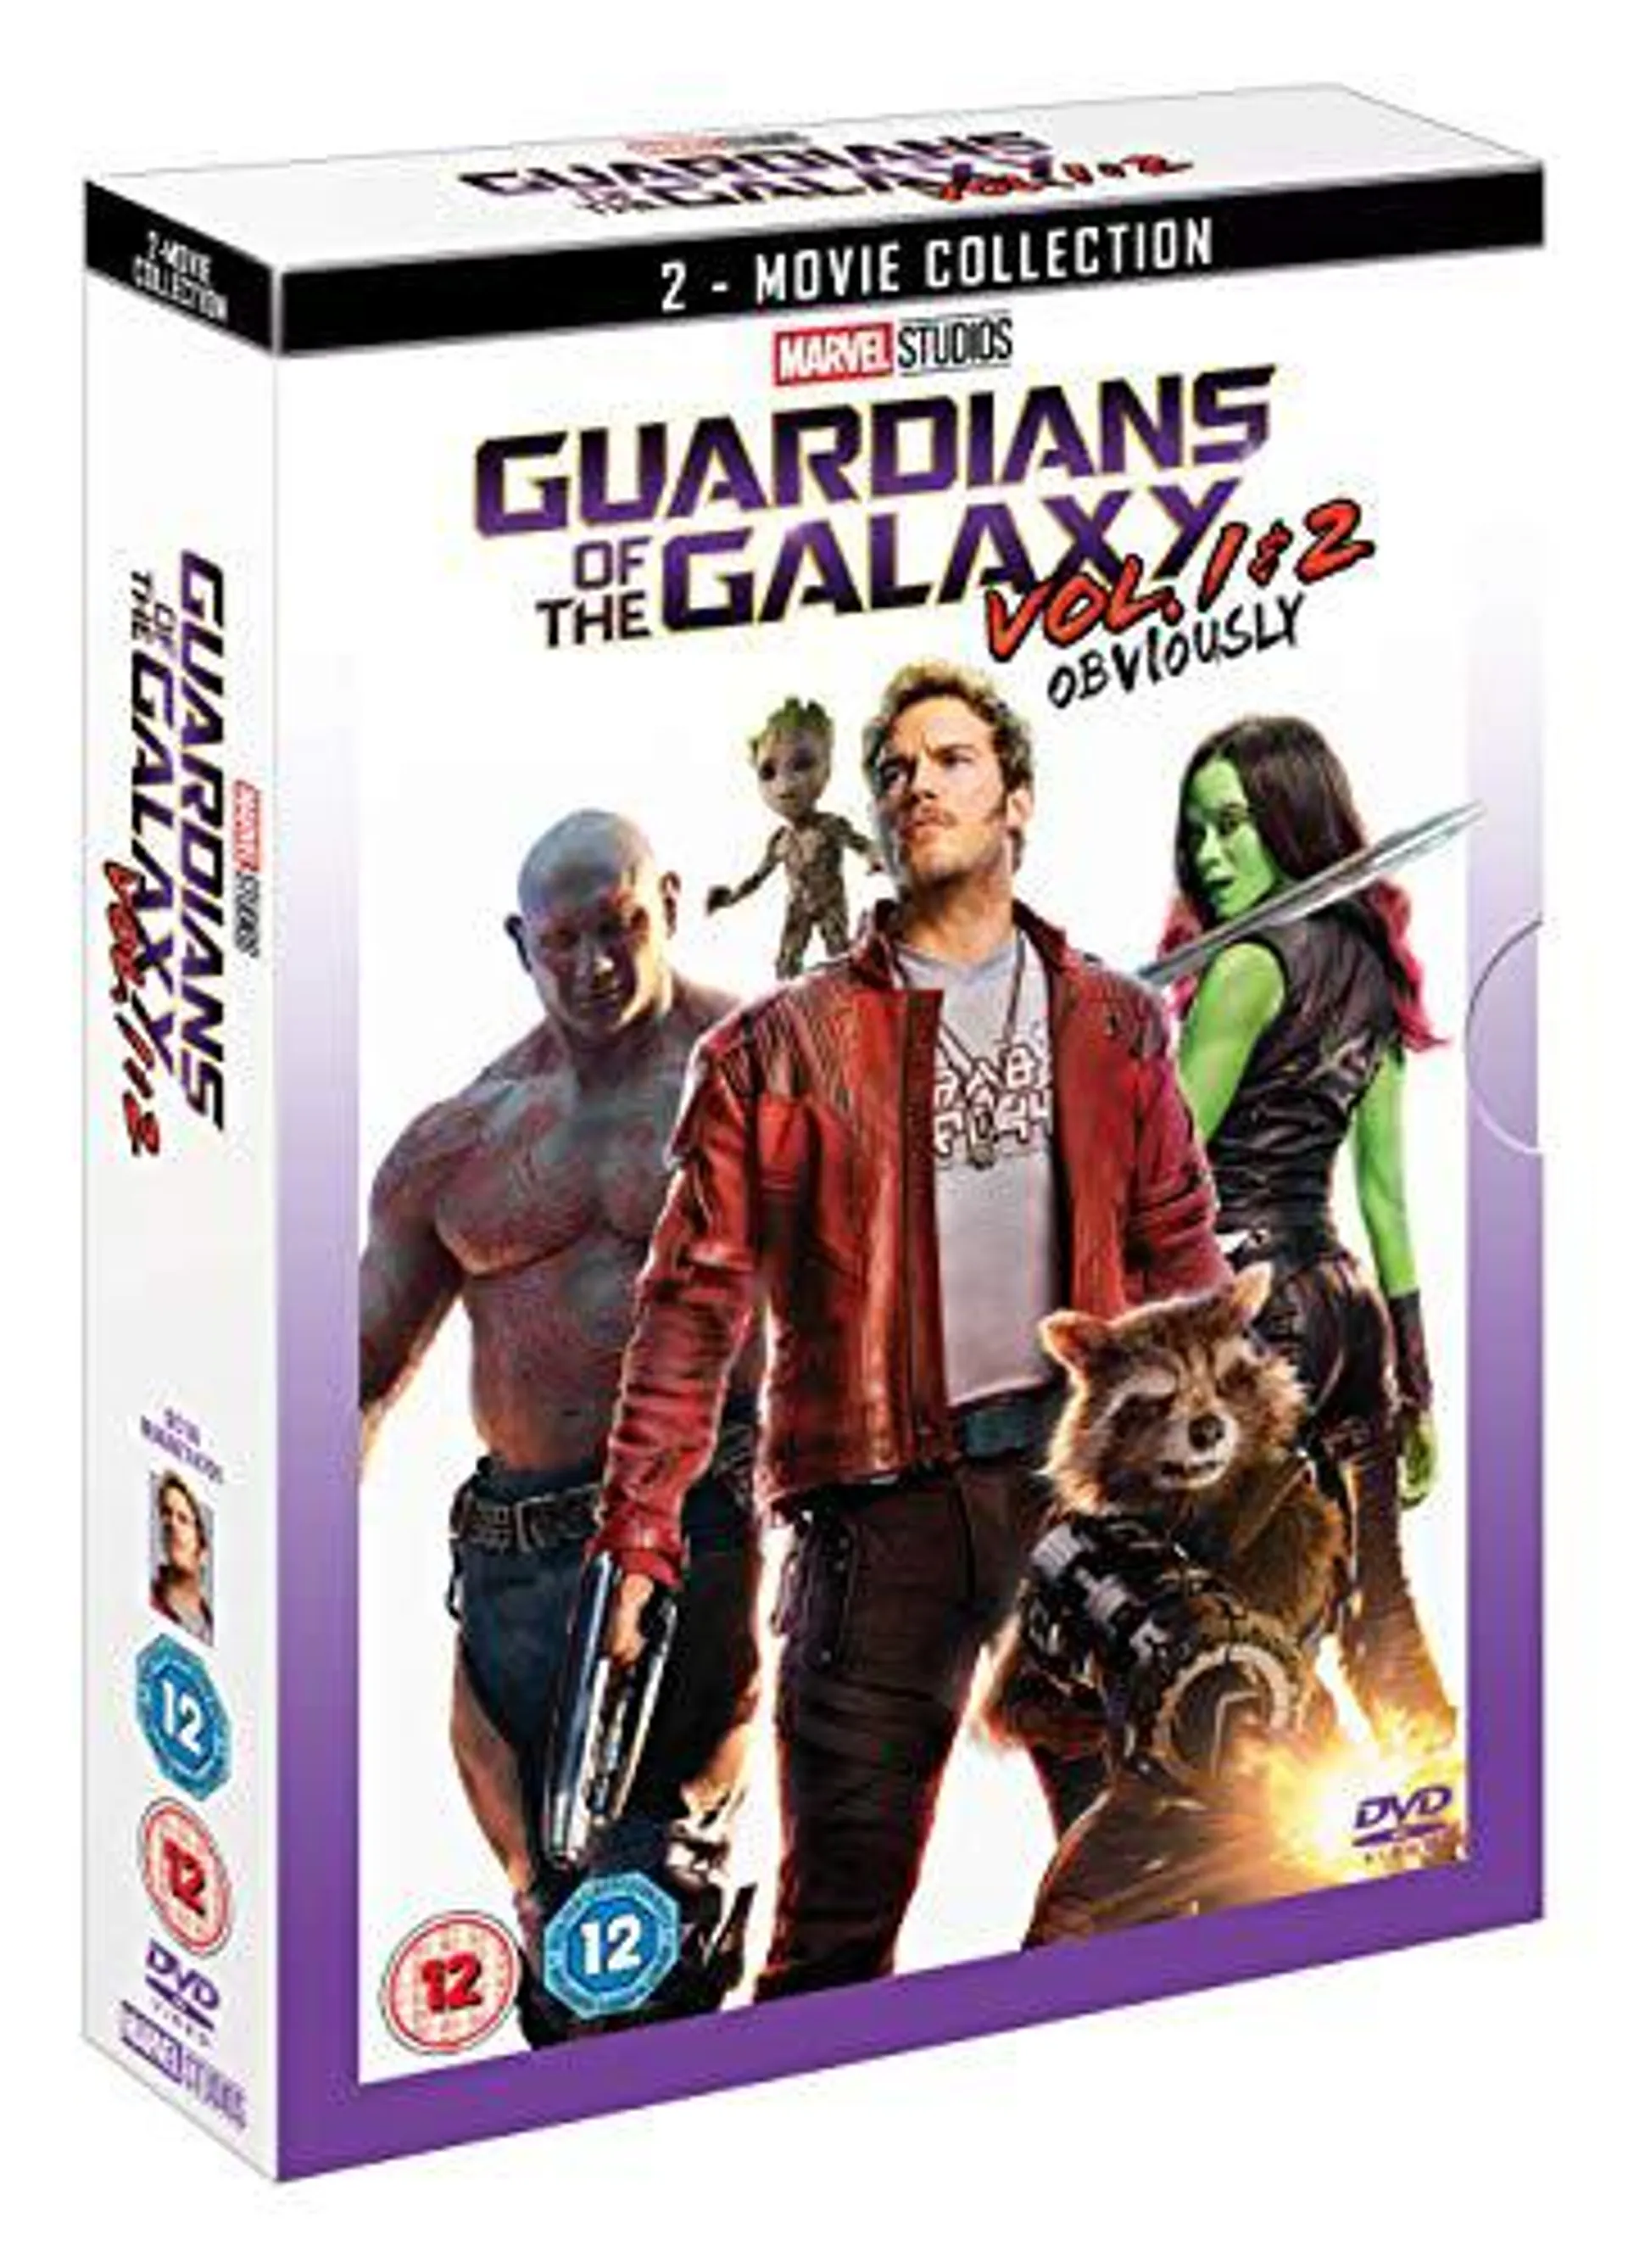 Guardians of the Galaxy & Guardians of the Galaxy Vol. 2 Doublepack